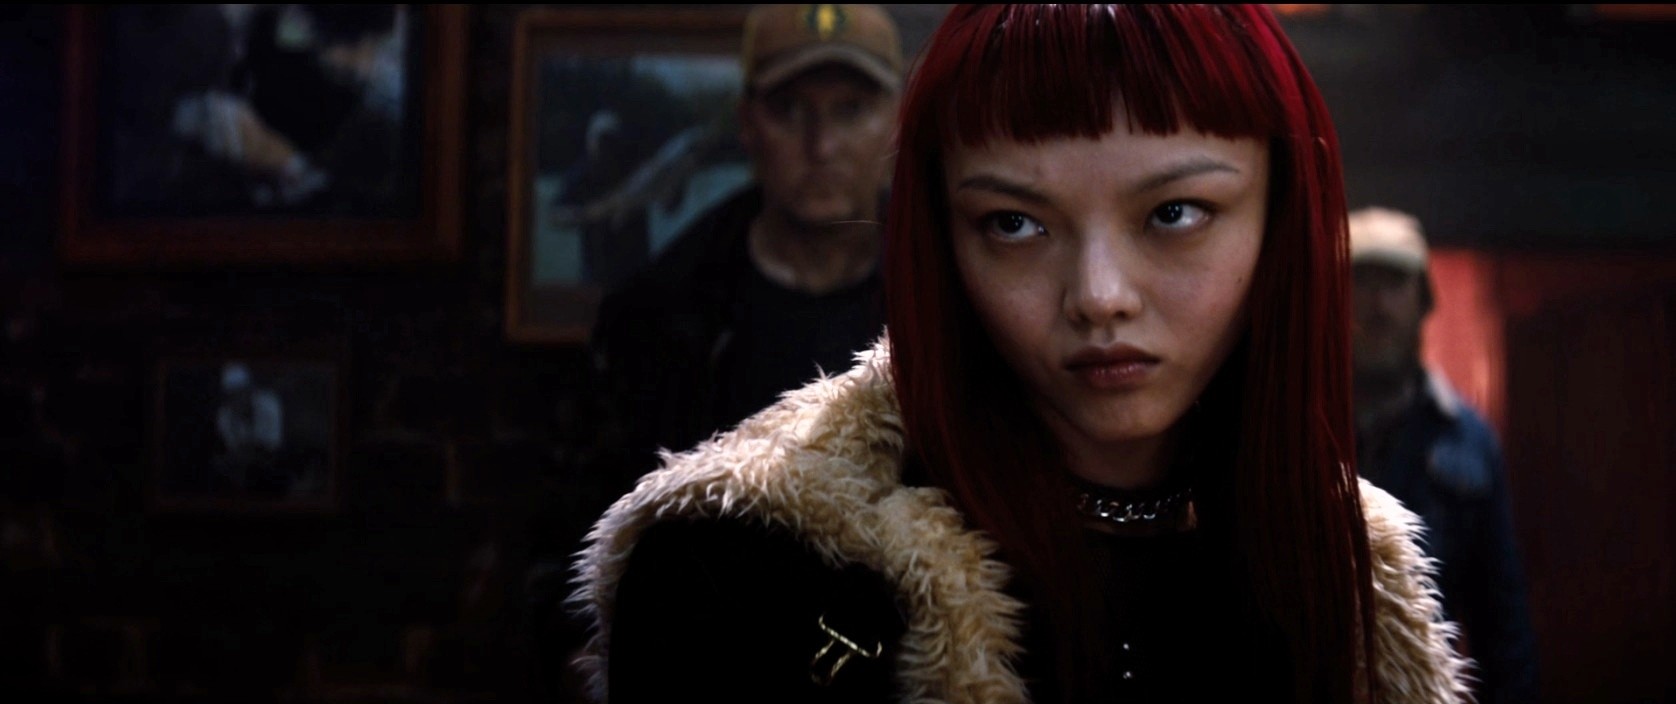 Rila Fukushima stars as Yukio in 20th Century Fox's The Wolverine ...